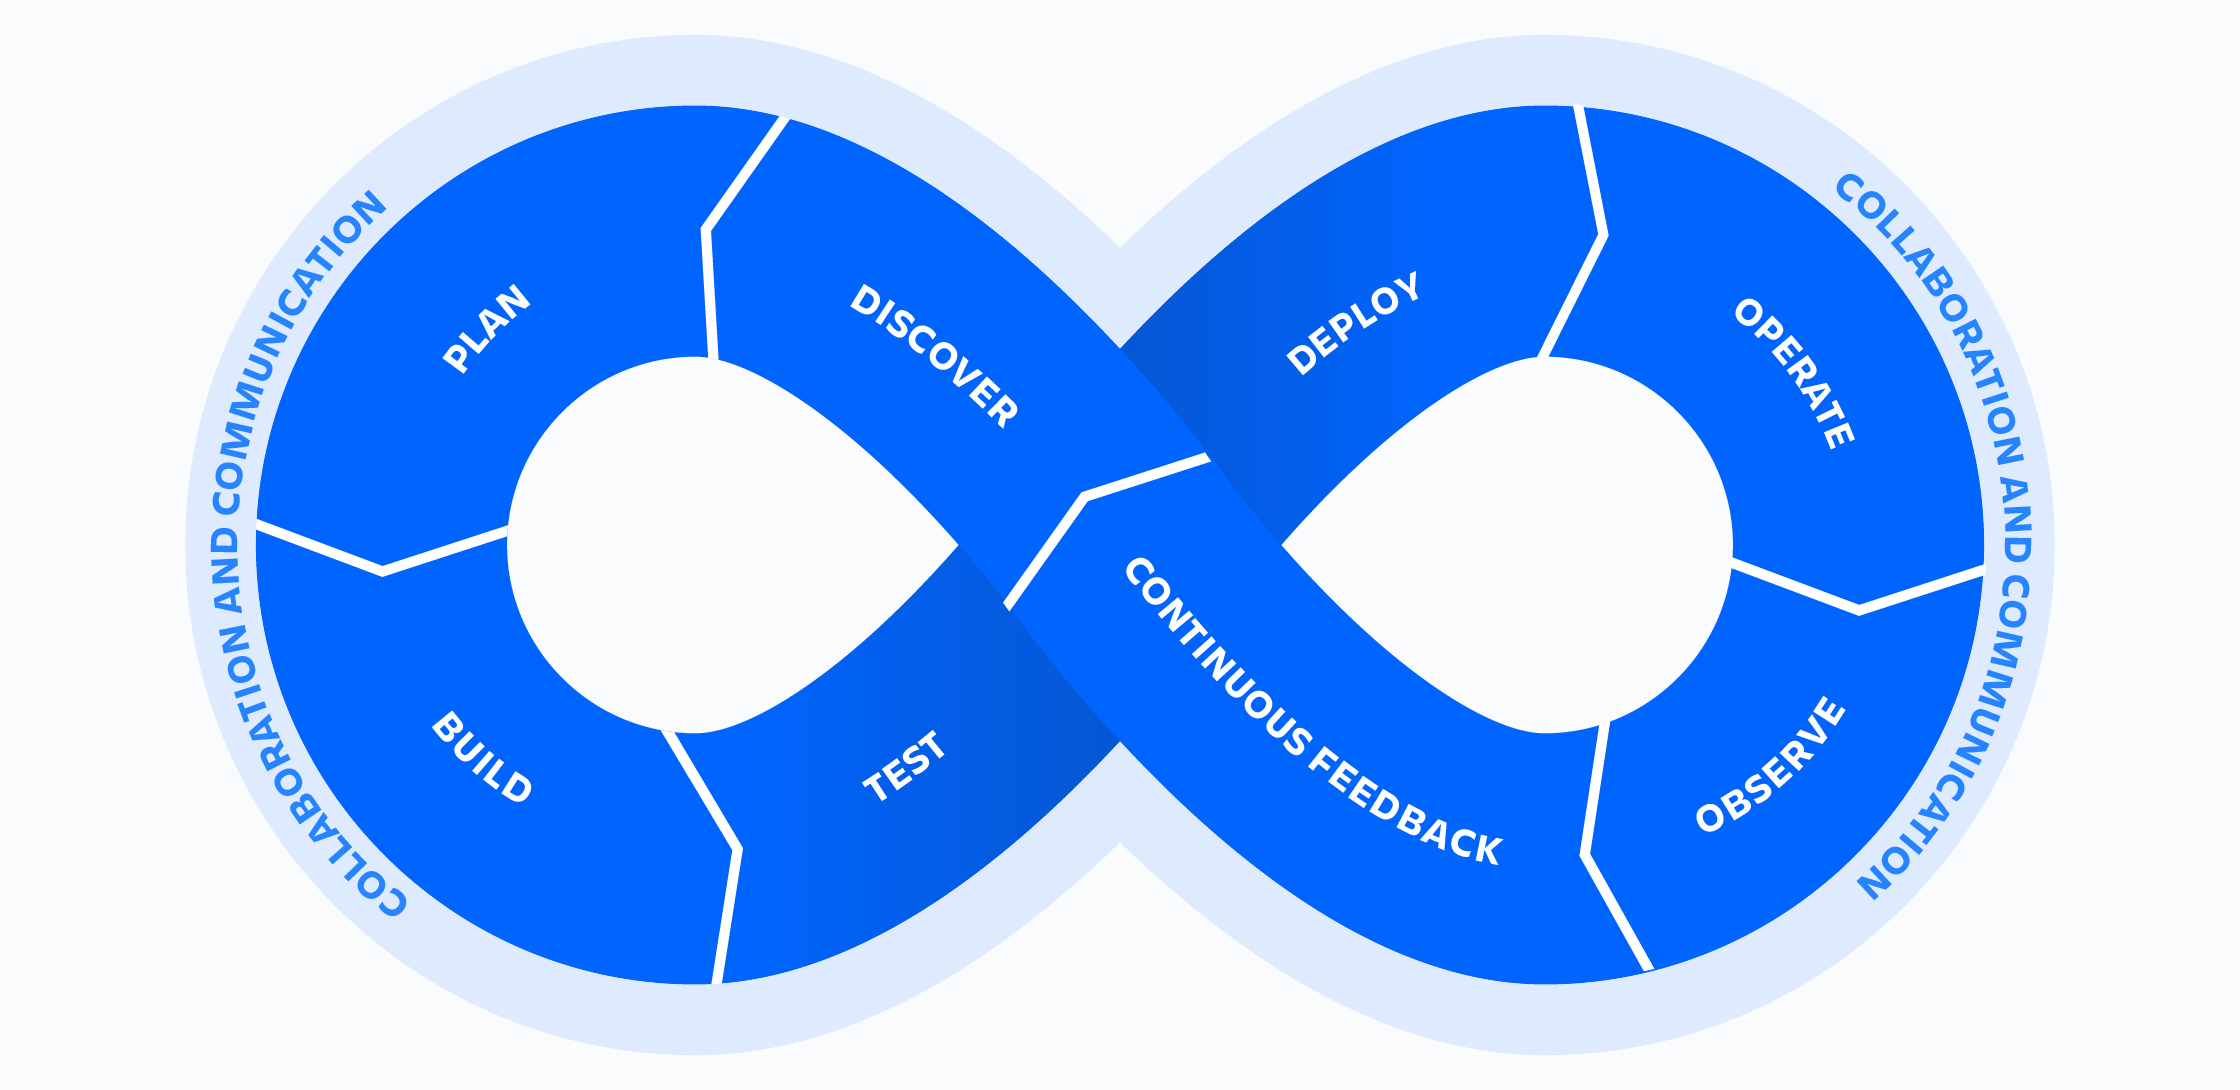 Símbolo do infinito do DevOps da Atlassian